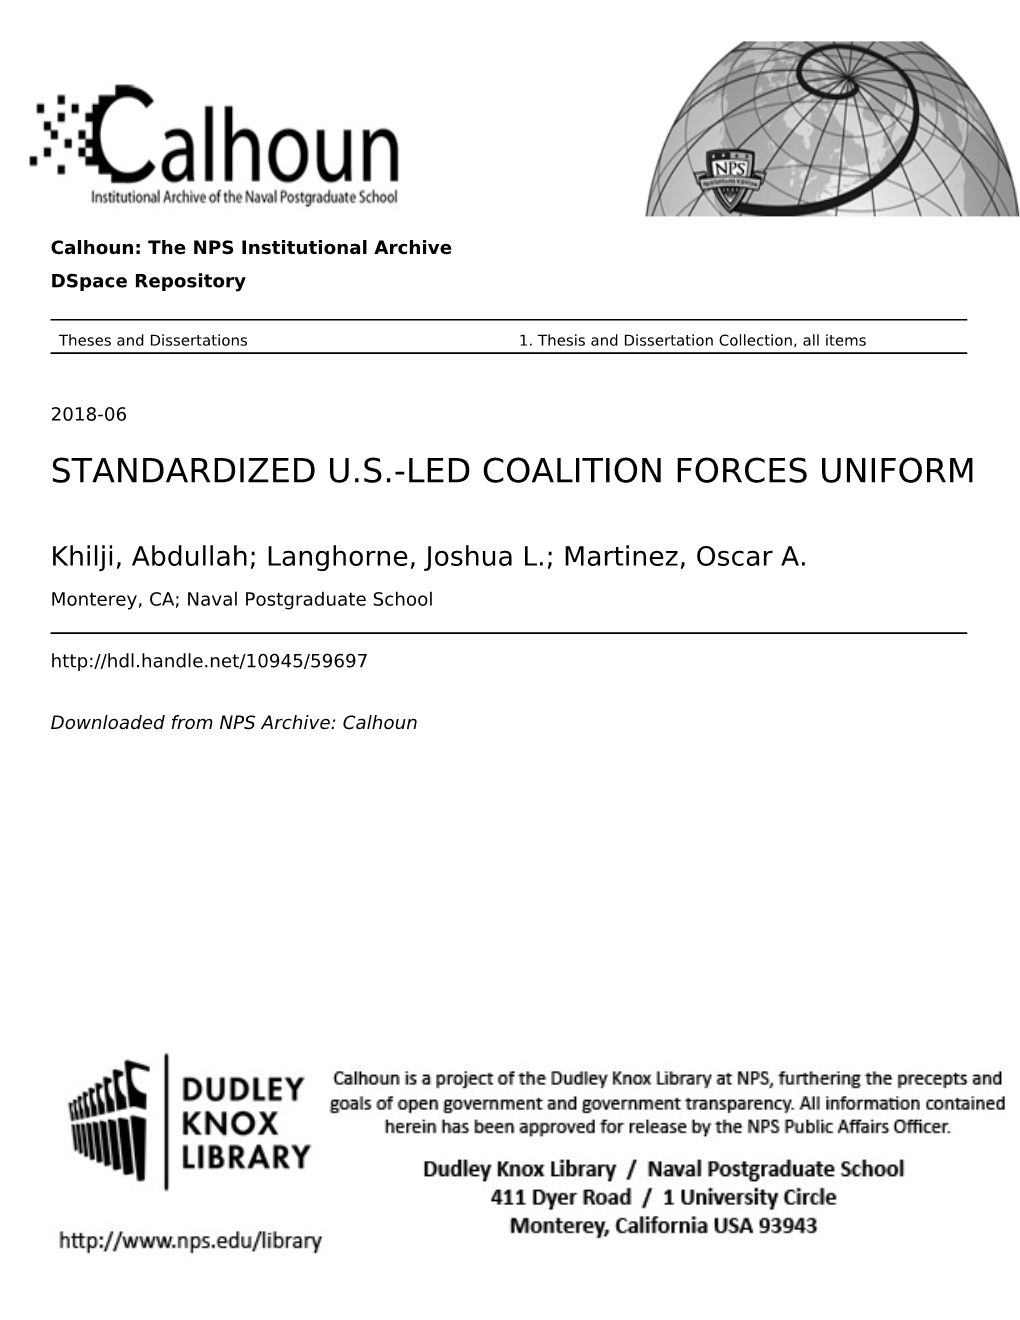 Standardized U.S.-Led Coalition Forces Uniform